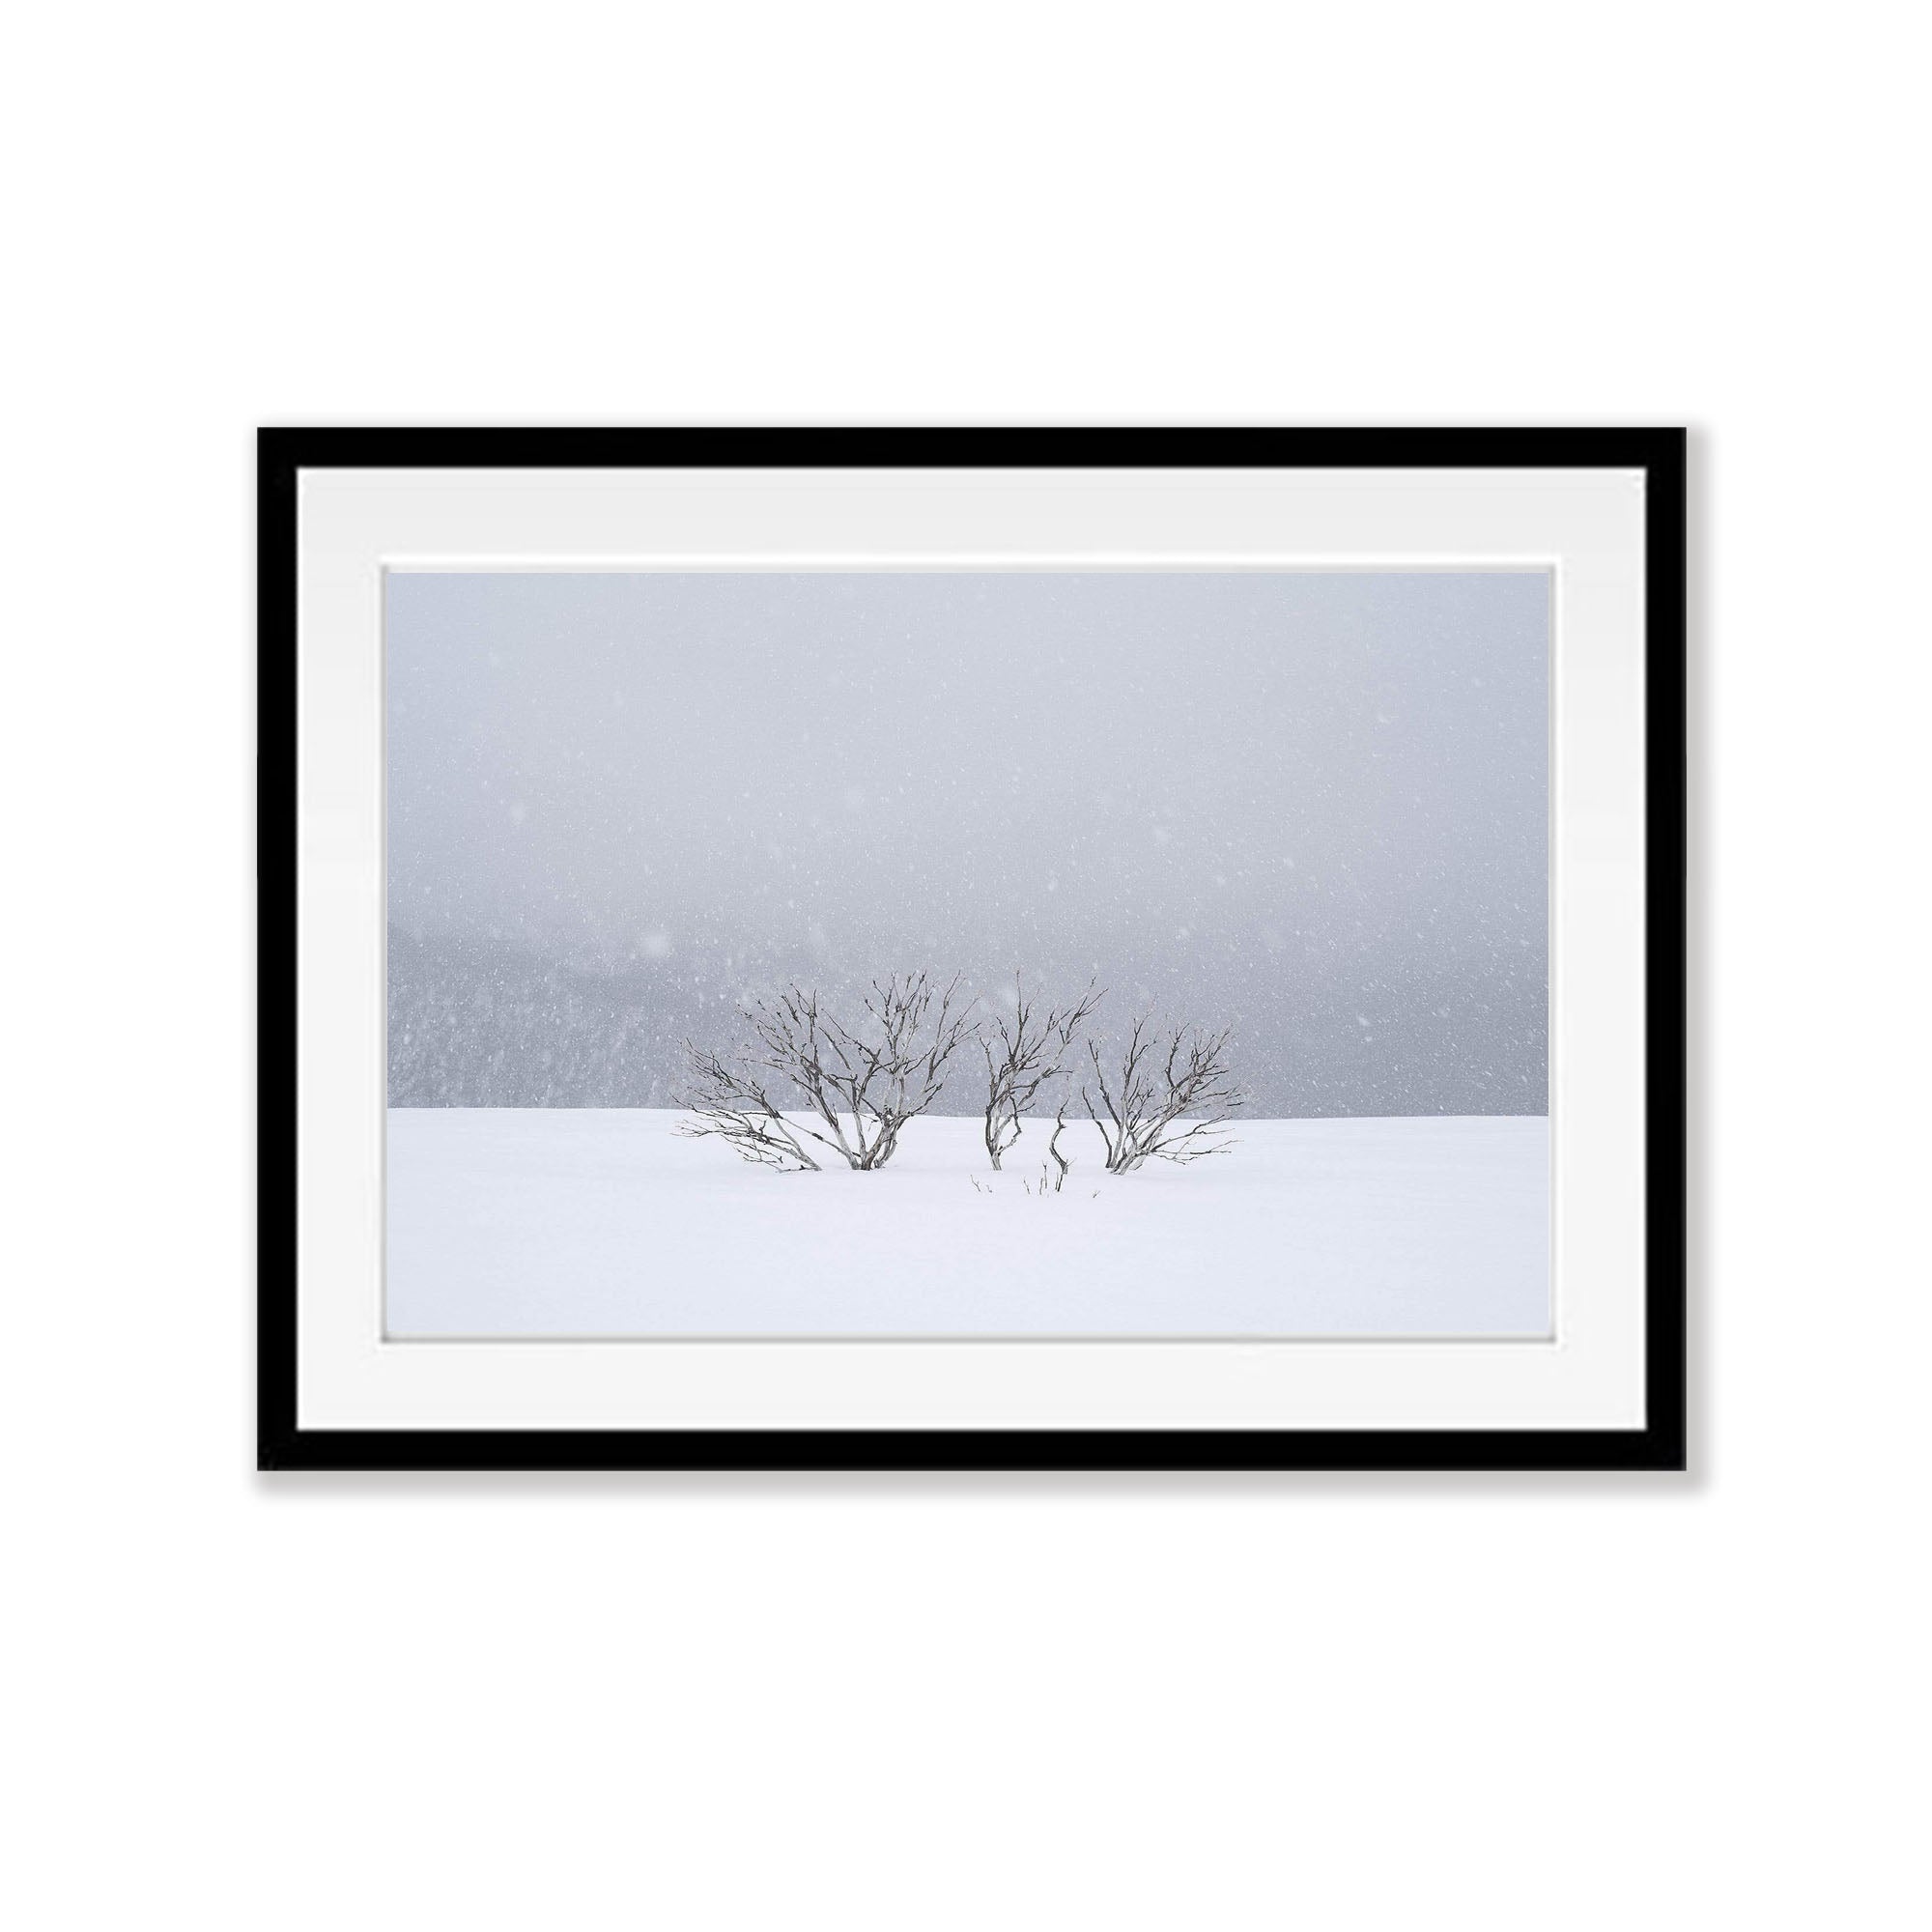 ARTWORK INSTOCK - Snowflakes, Mount Hotham, Victoria - 150 x 100cms Canvas Raw Oak Print